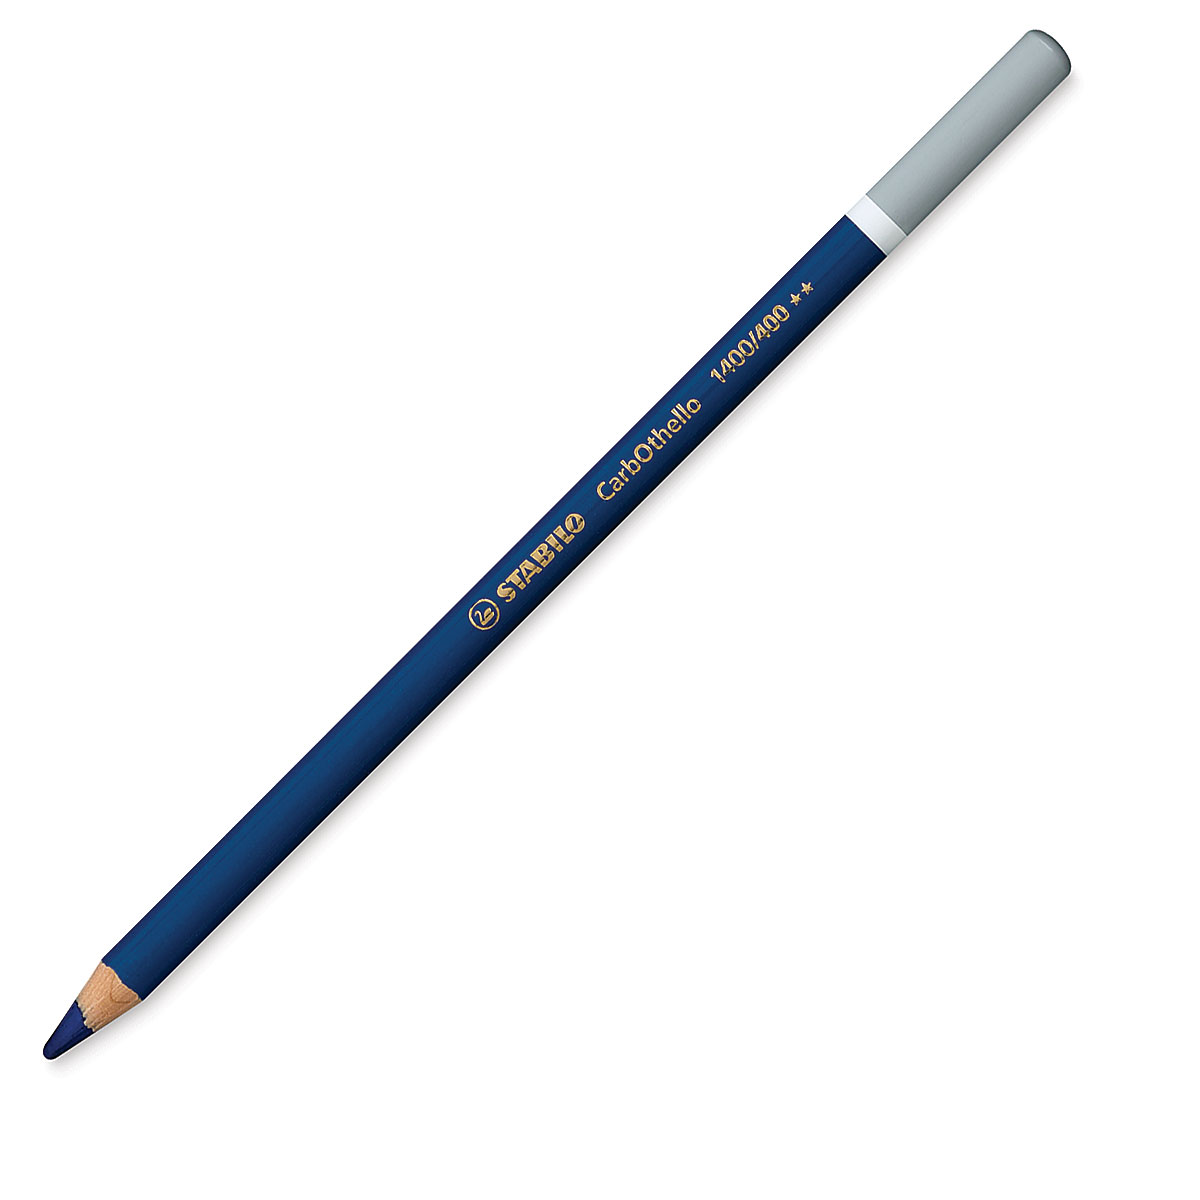 Stabilo CarbOthello Pastel Pencils - Set of 24